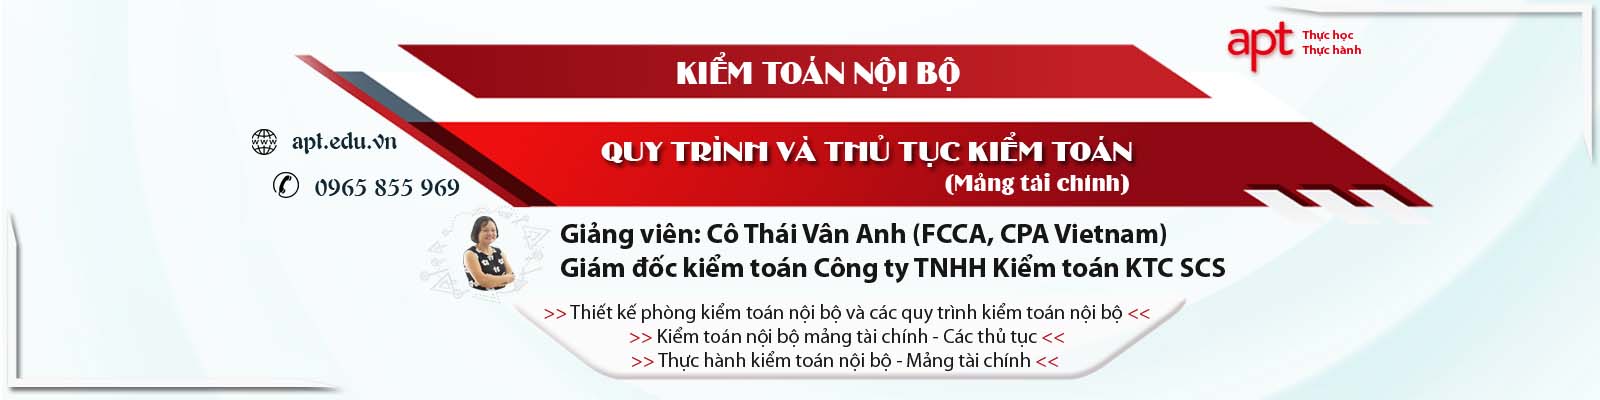 Kiem-Toan-Noi-Bo-Quy-Trinh-Thu-Tuc-Mang-Tai-Chinh-k06